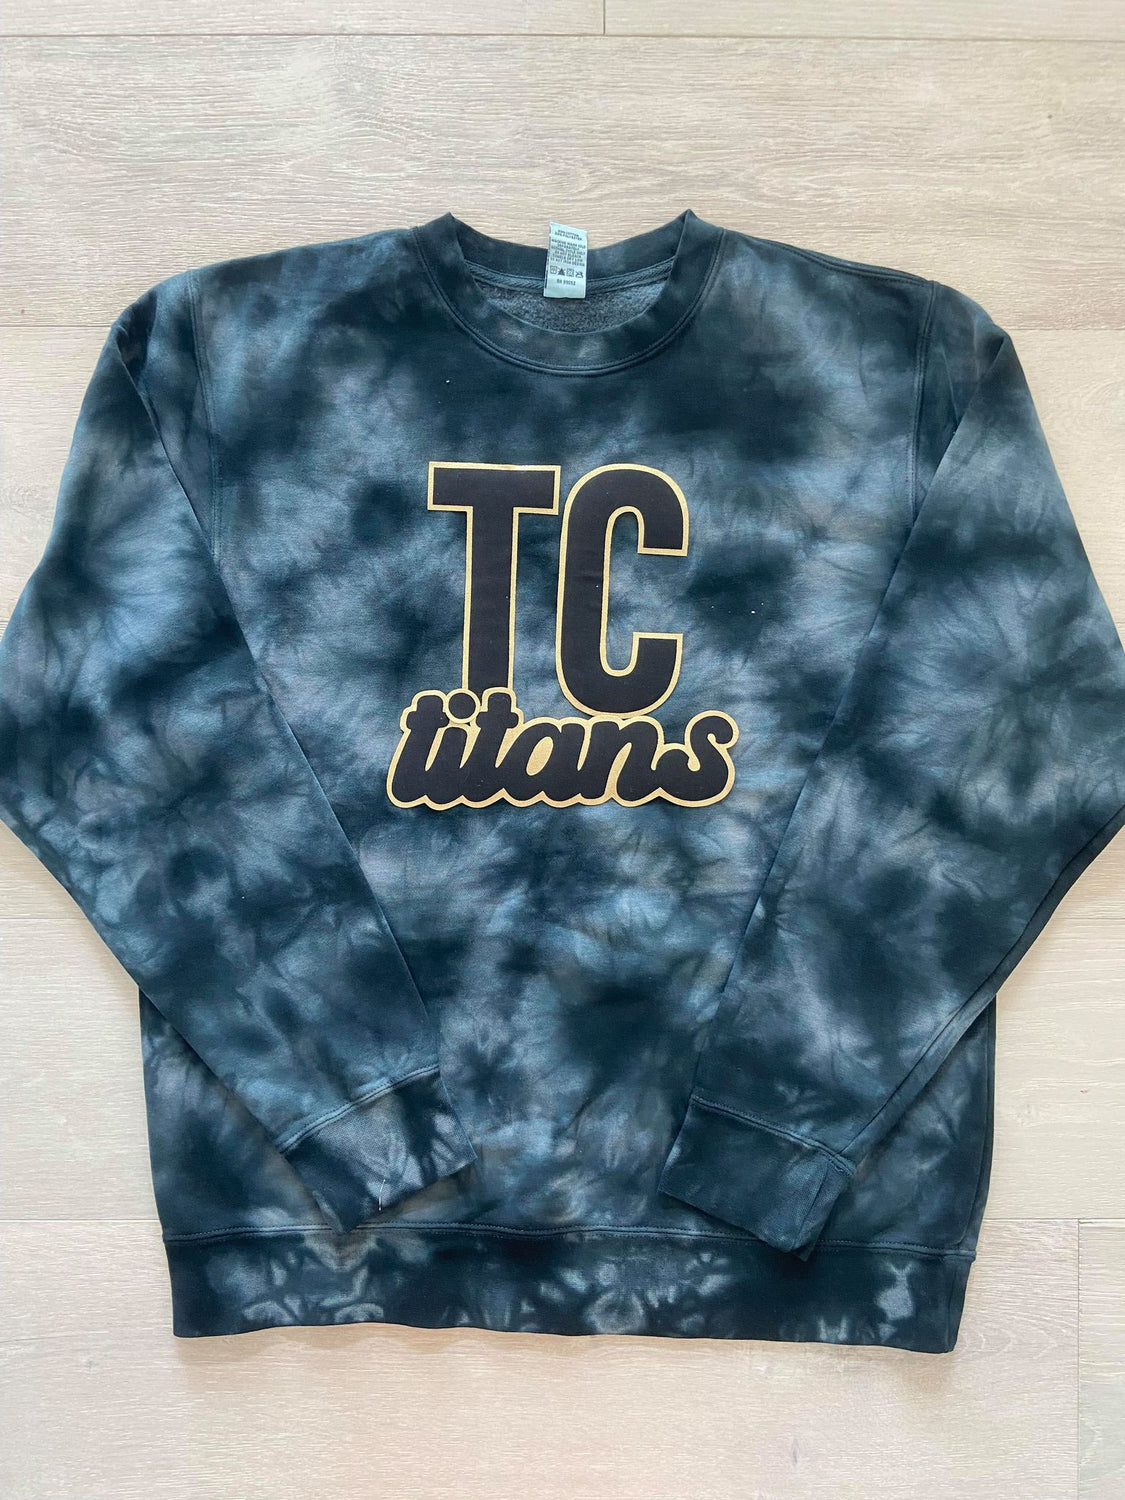 TC TITANS - BLACK DYED CREW